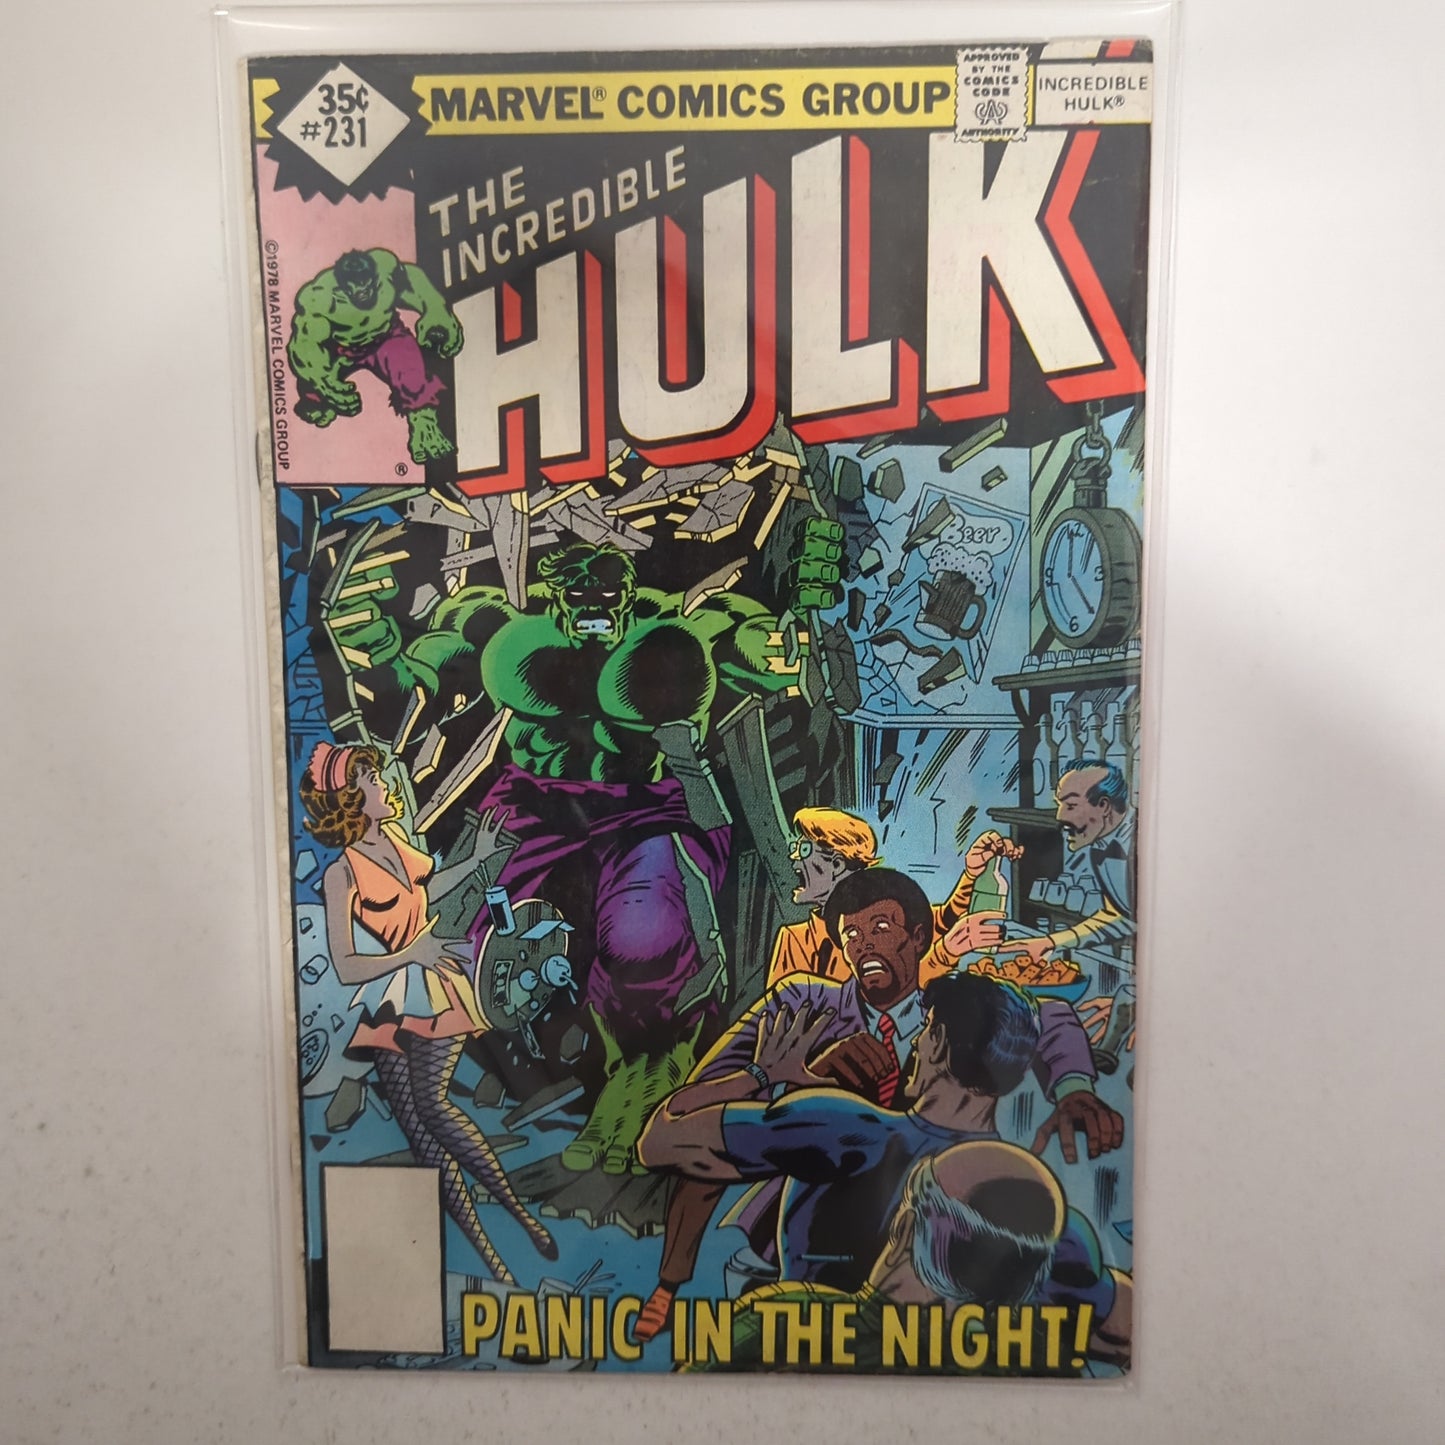 The Incredible Hulk #231